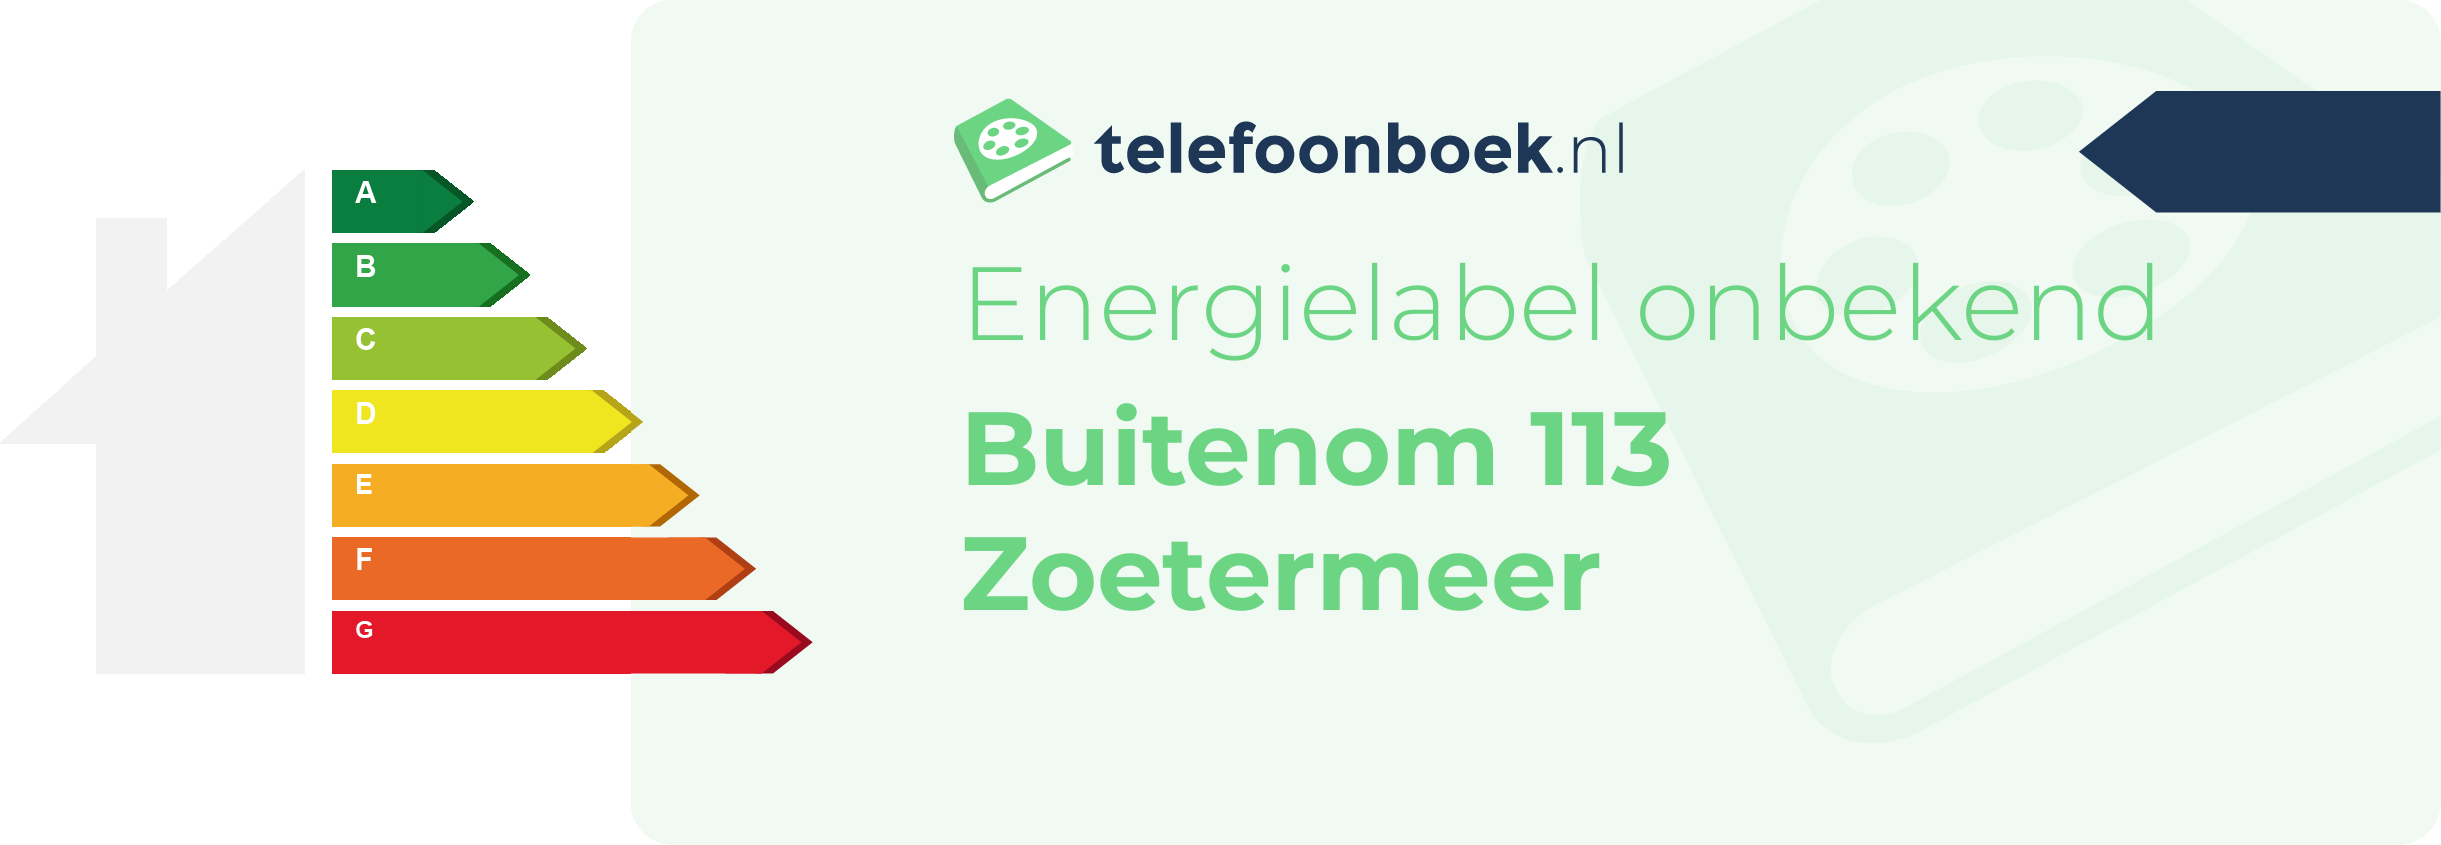 Energielabel Buitenom 113 Zoetermeer